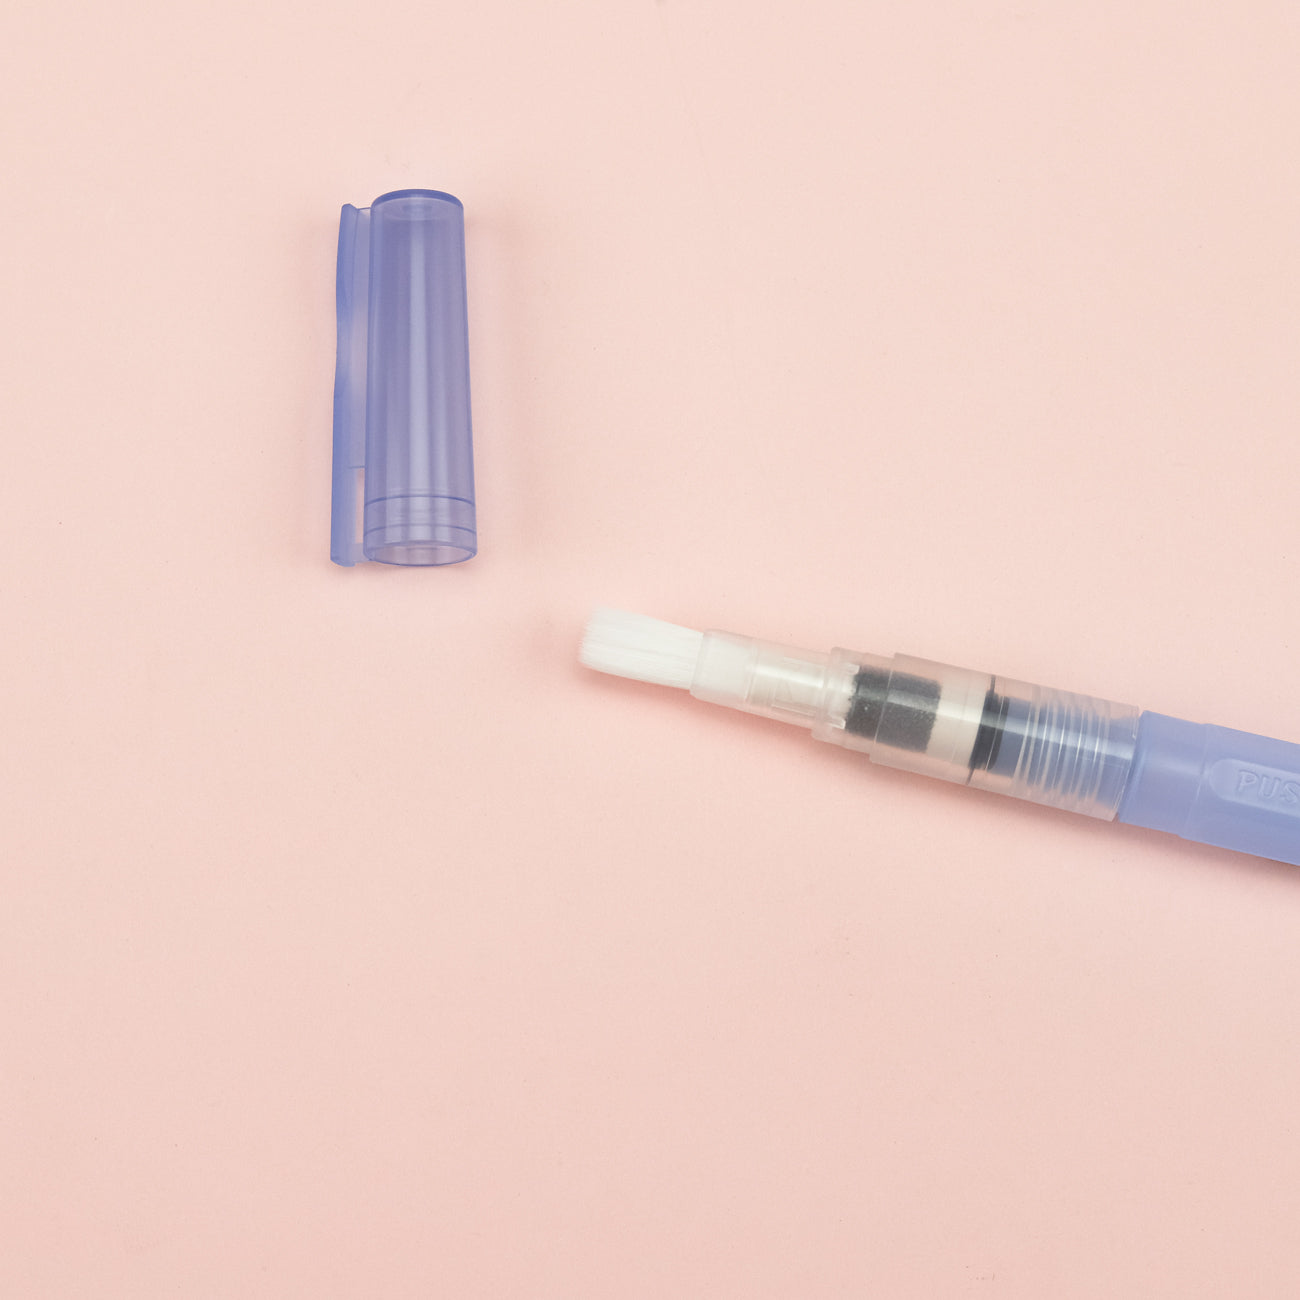 Review: Kuretake Ultra Fine Pigmented Water-based Brush Pen - RozWoundUp